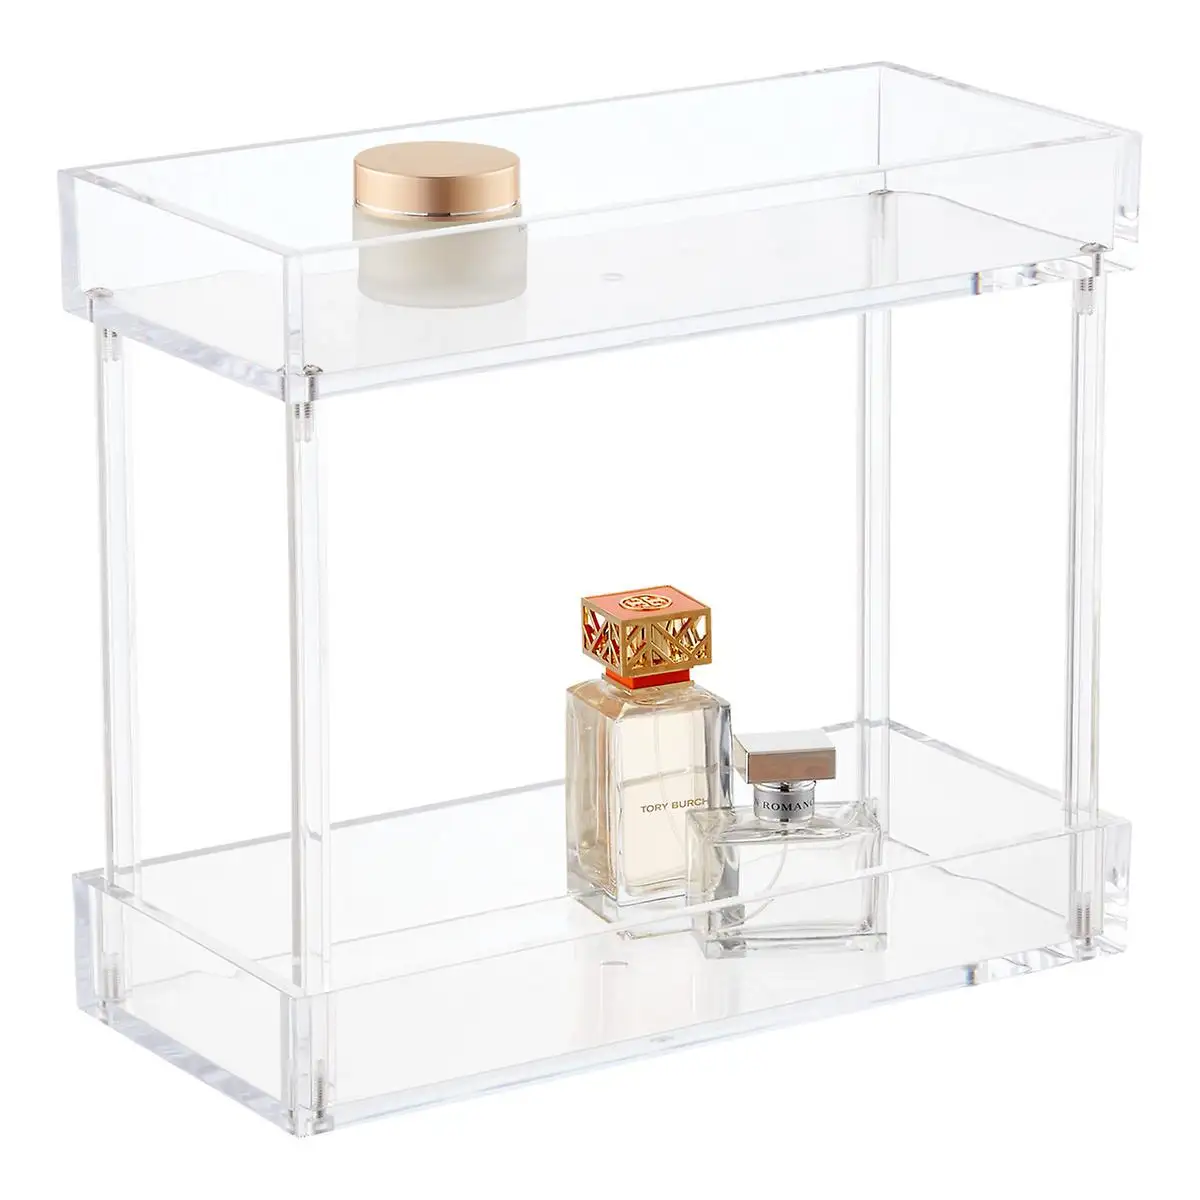 Soporte de exhibición de perfume acrílico, transparente, desmontado, 2 niveles